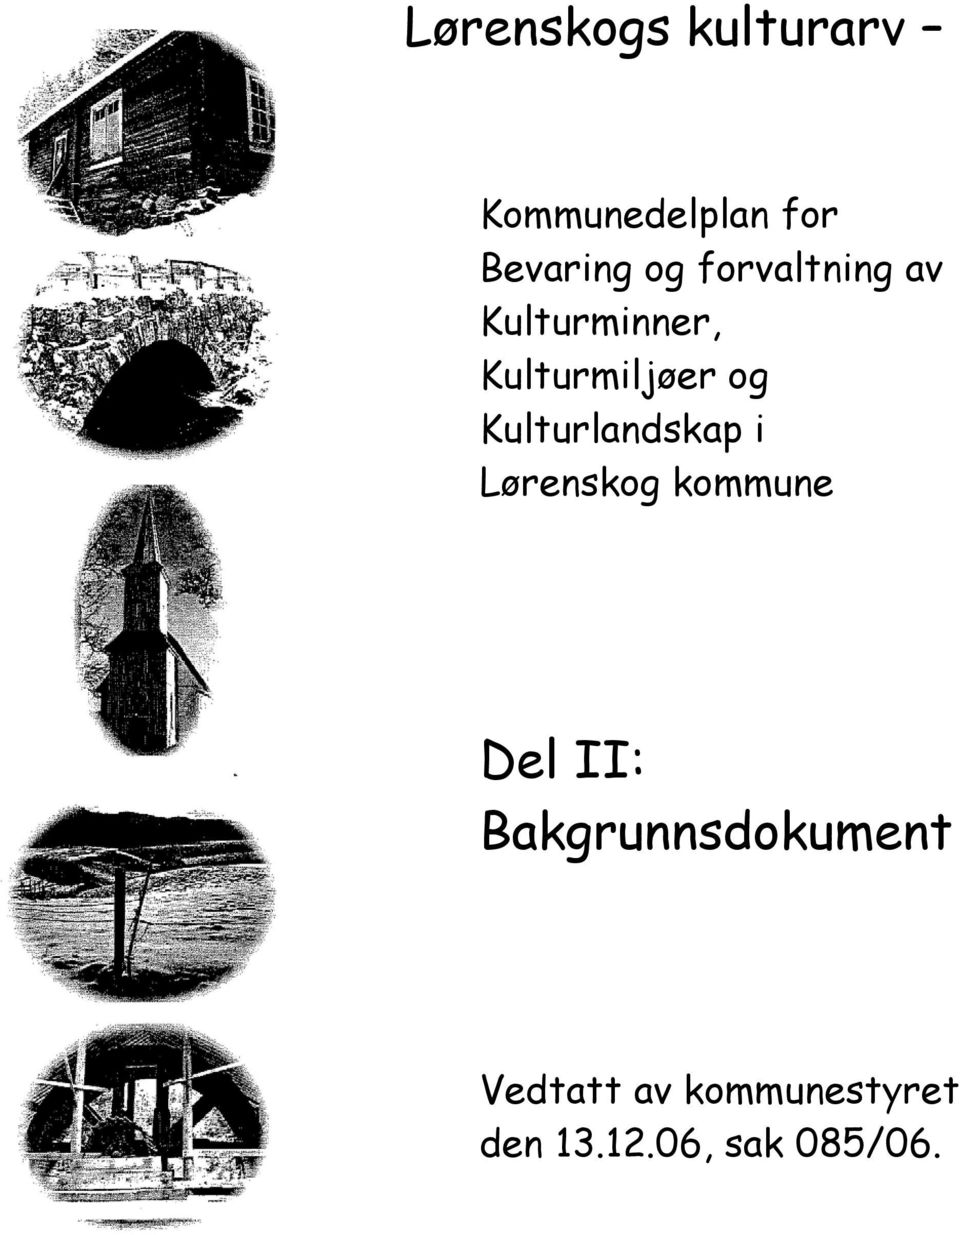 Kulturlandskap i Lørenskog kommune Del II: